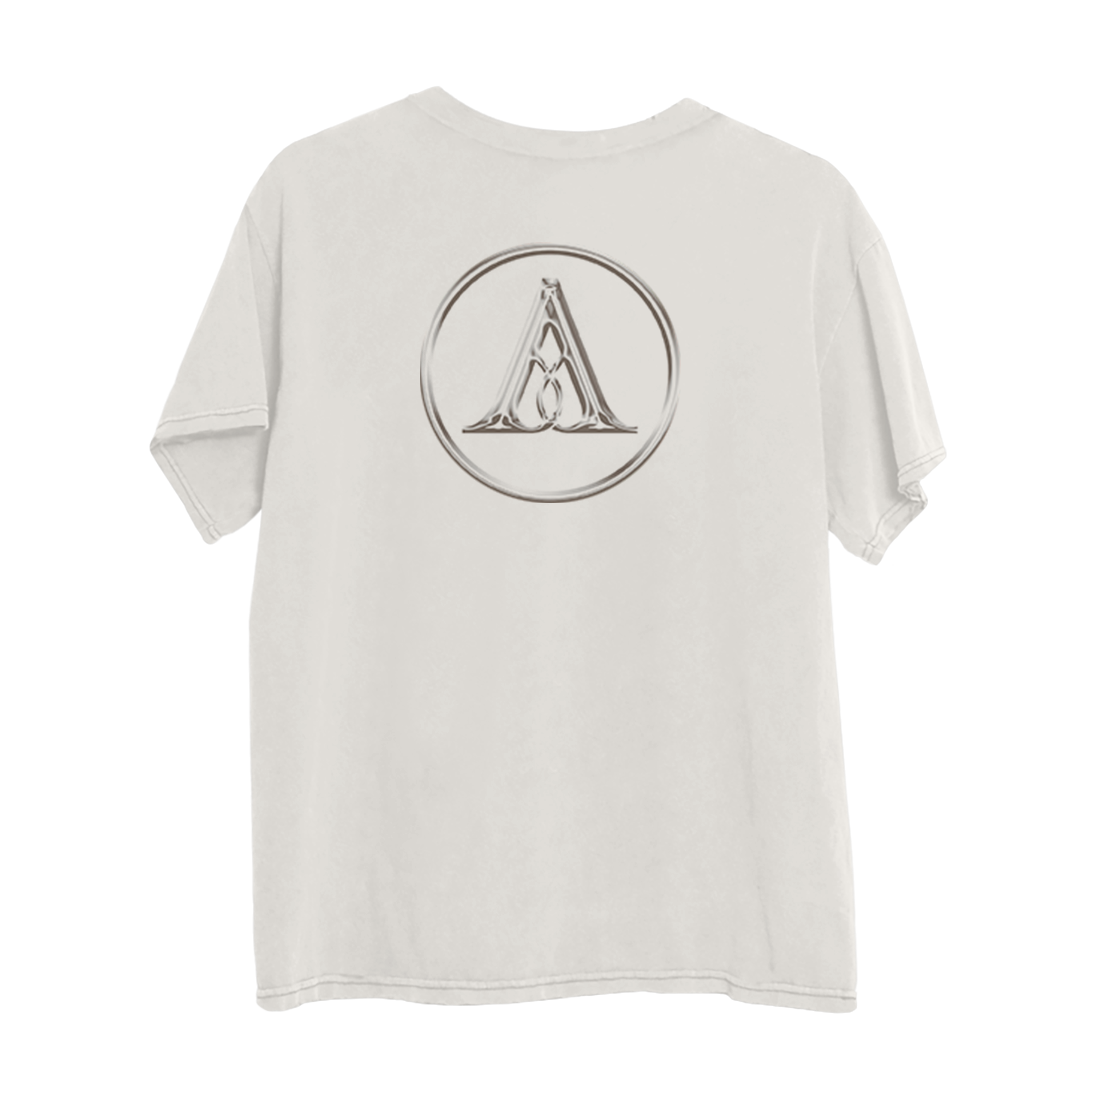 Greta Van Fleet - Starcatcher "A" Logo T-Shirt